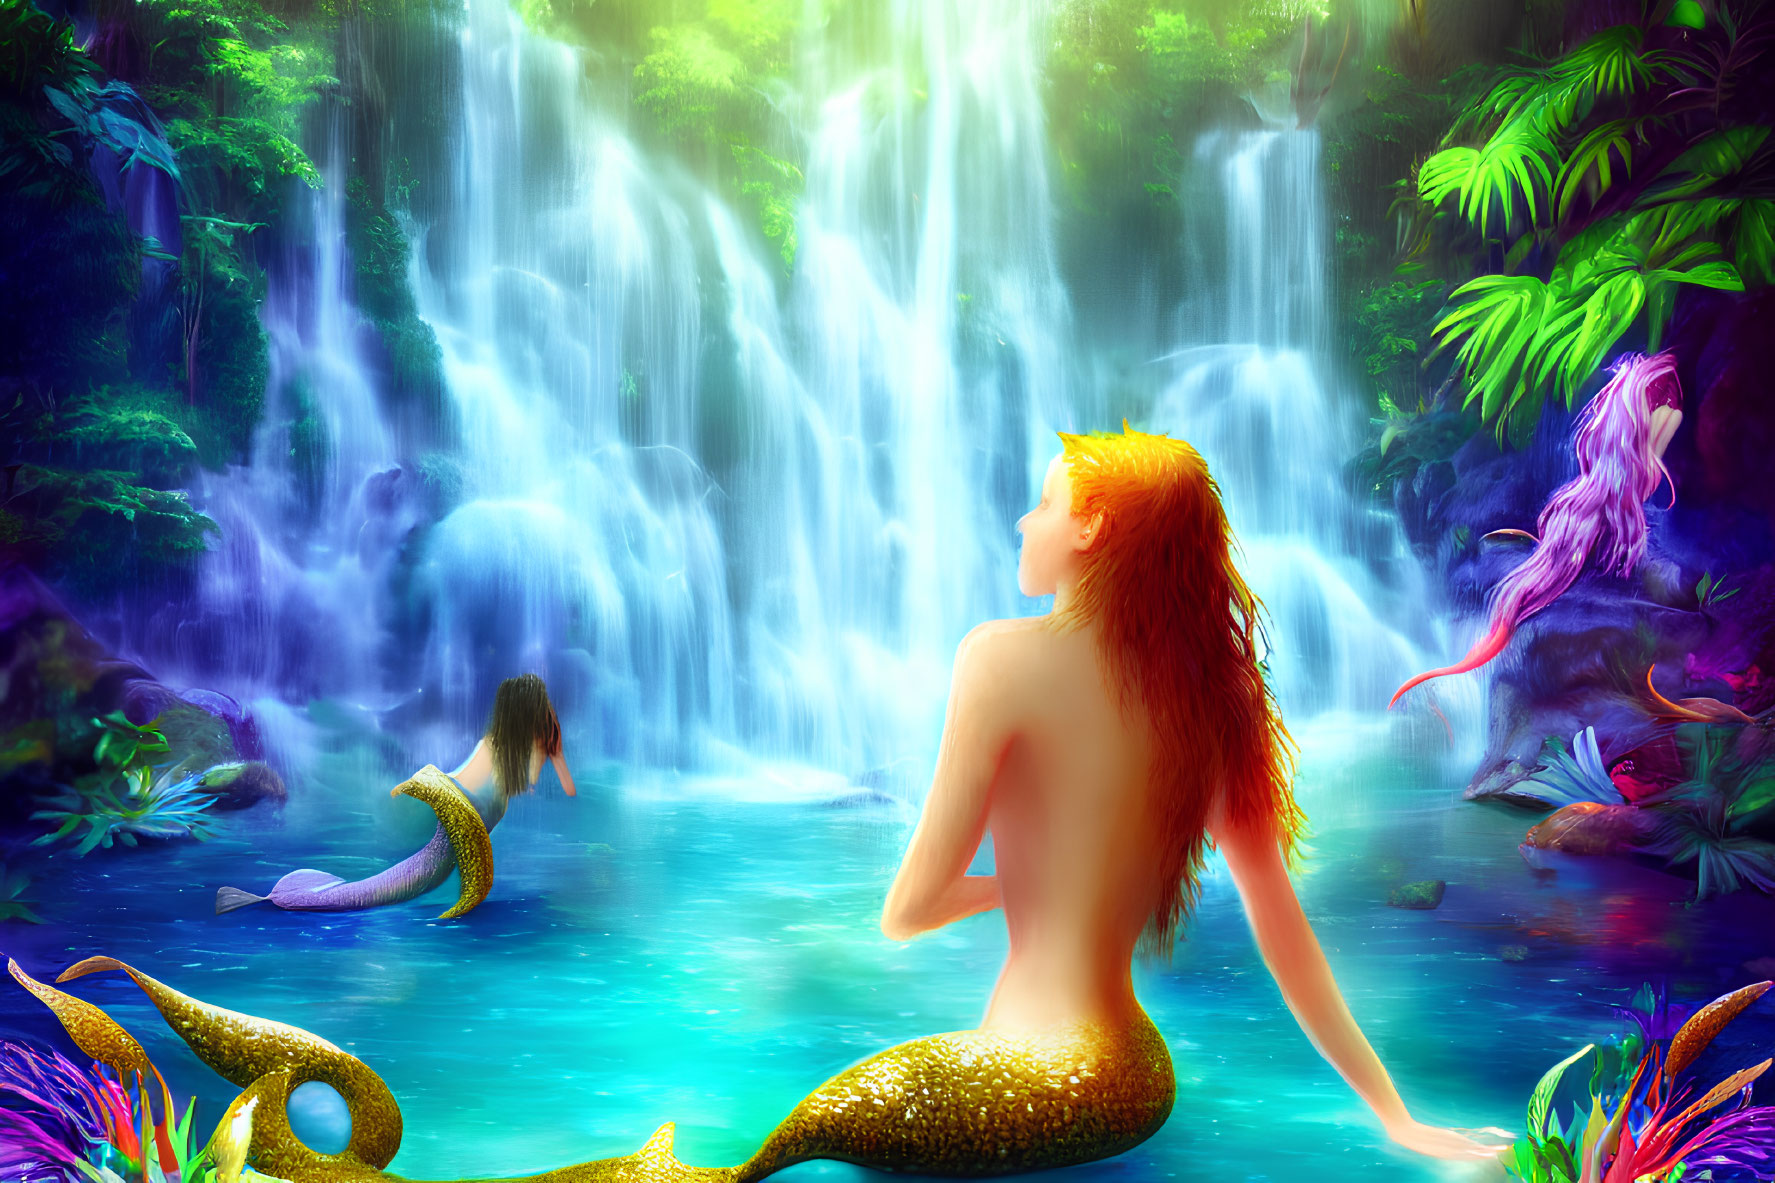 Vibrant-tailed mermaids at tropical jungle waterfall